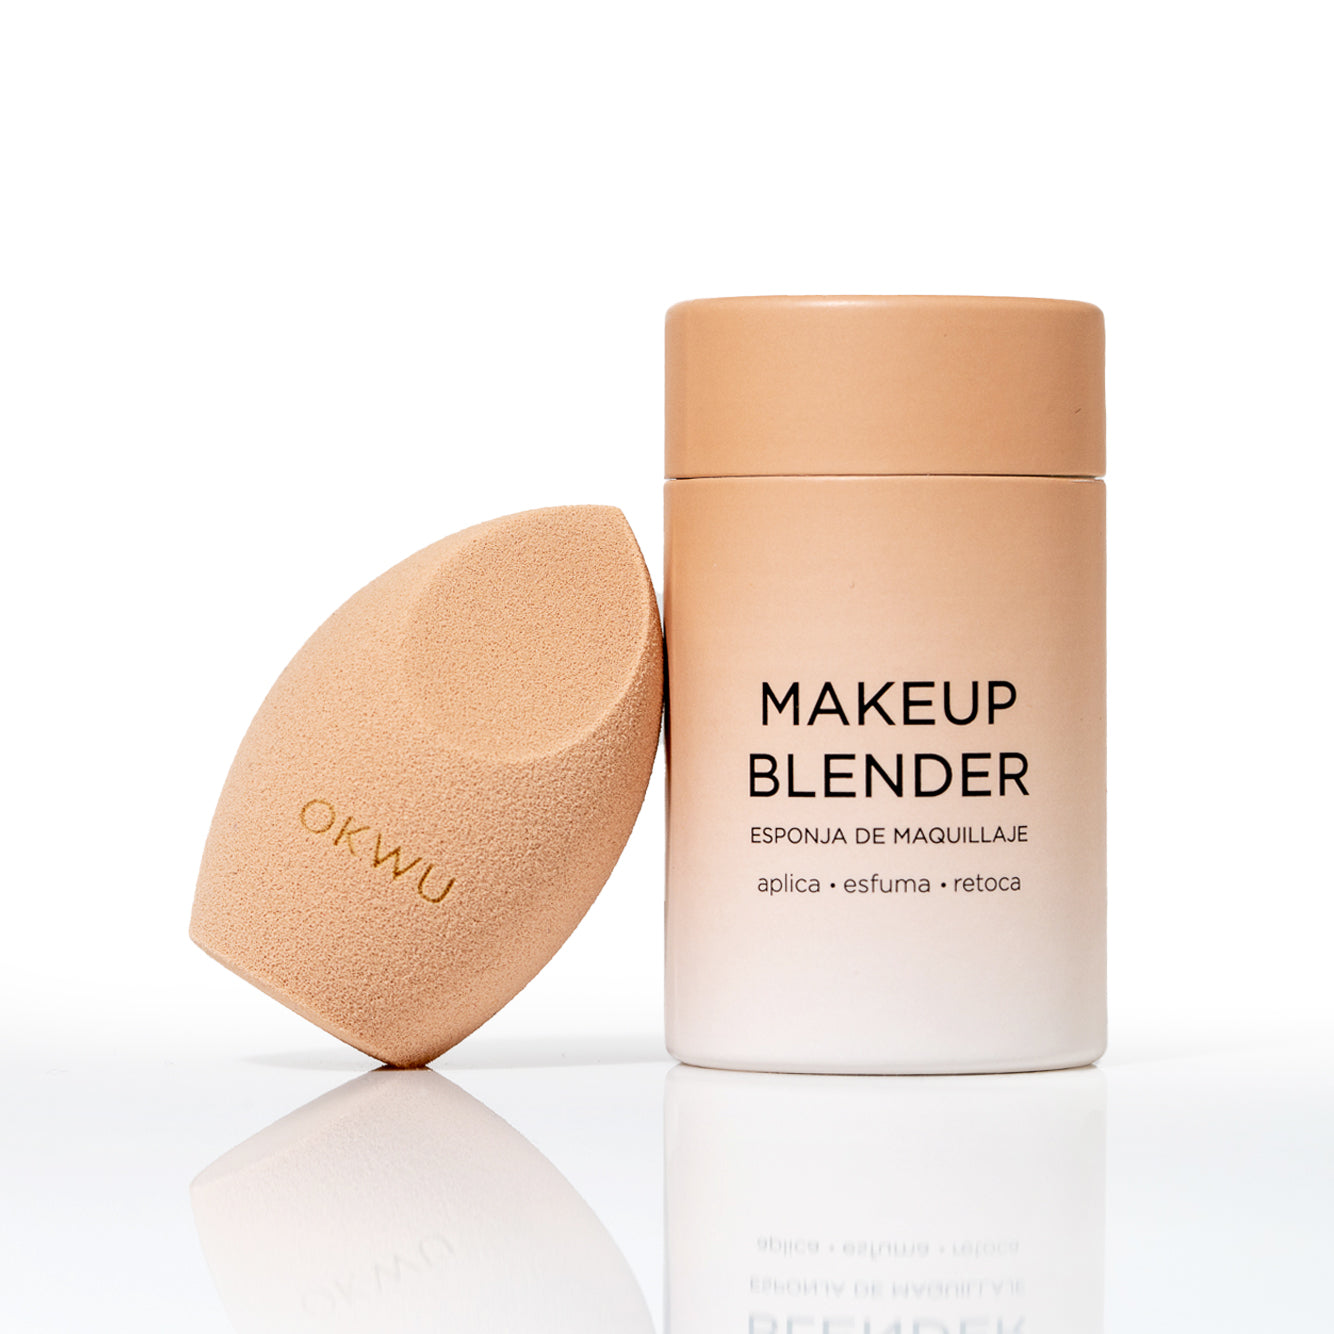 Makeup Blender - Esponja de maquillaje